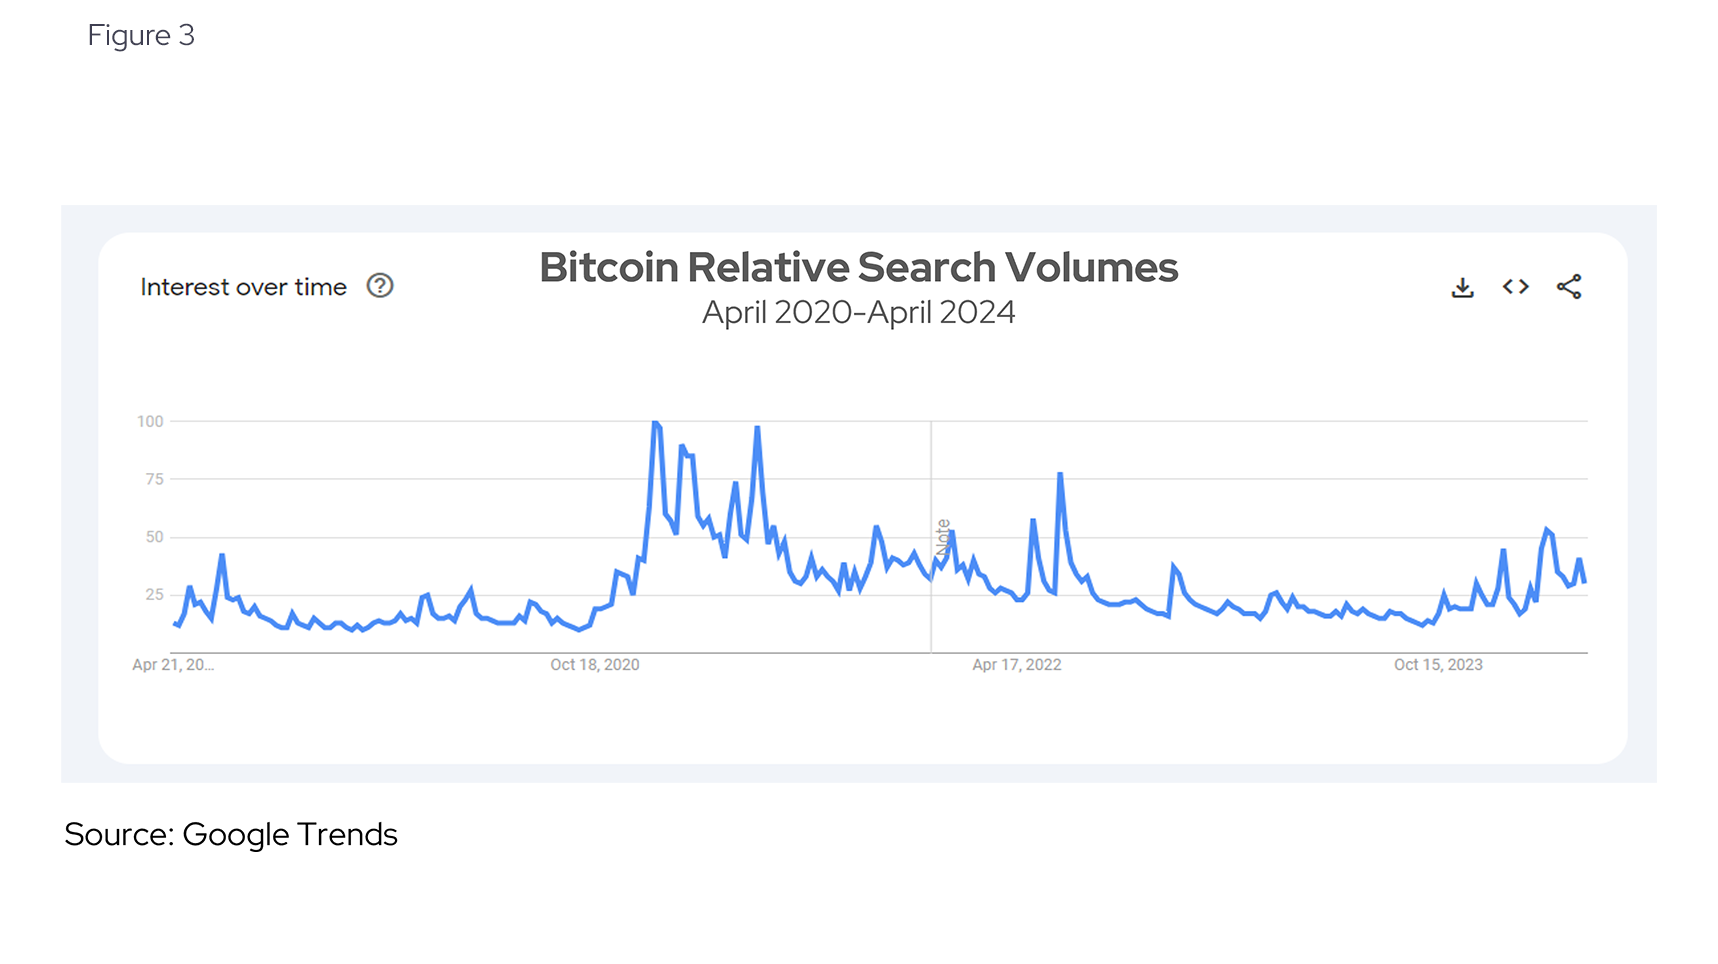 Bitcoin Relative Search Volumes